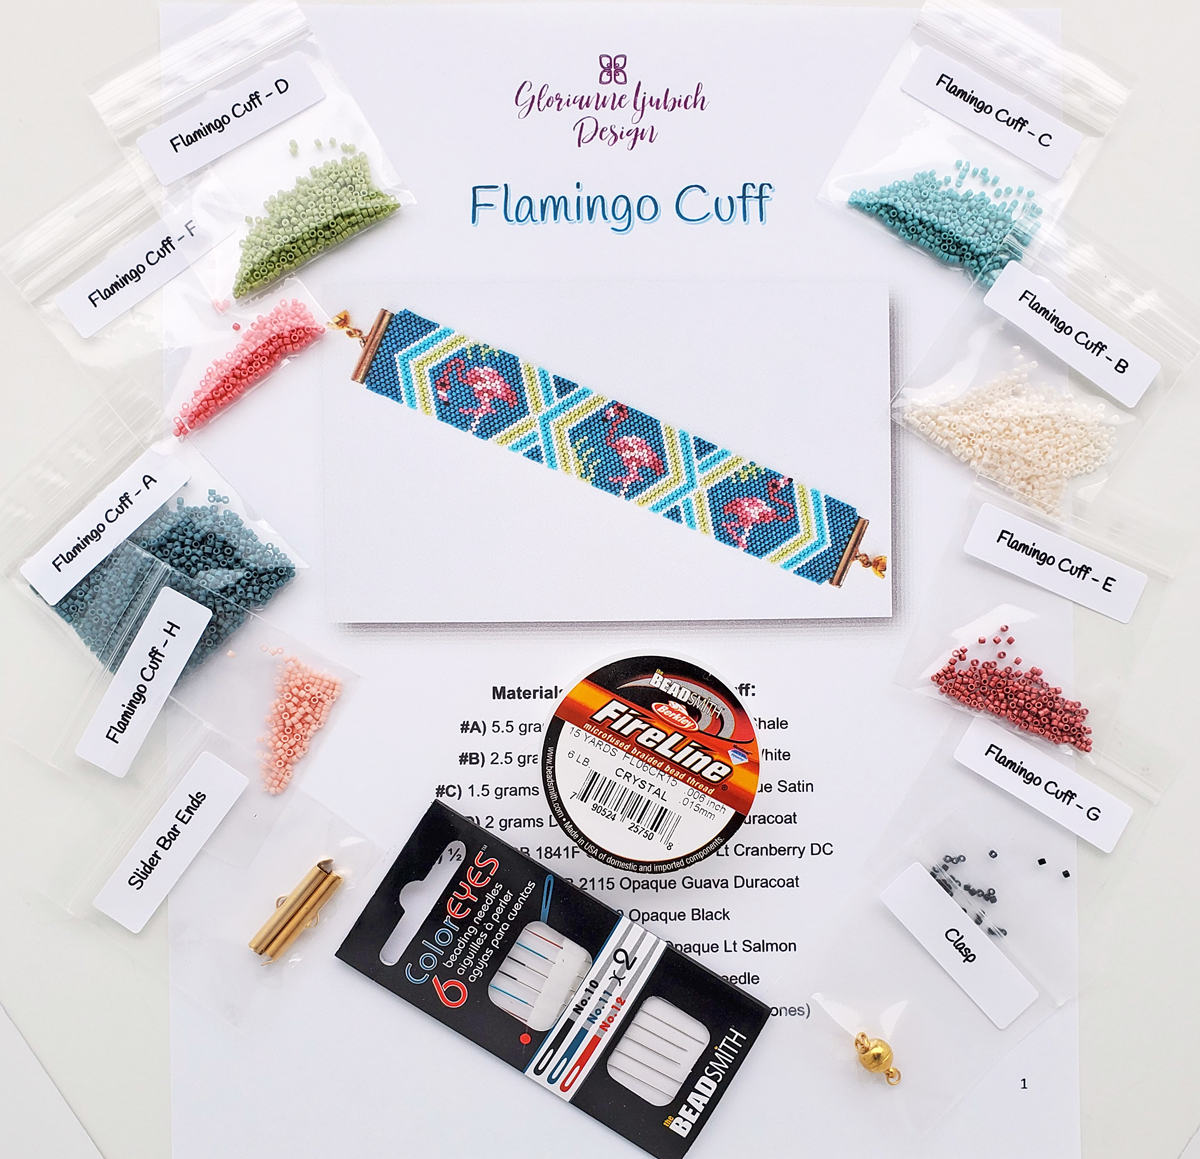 Flamingo Cuff Kit Supplies